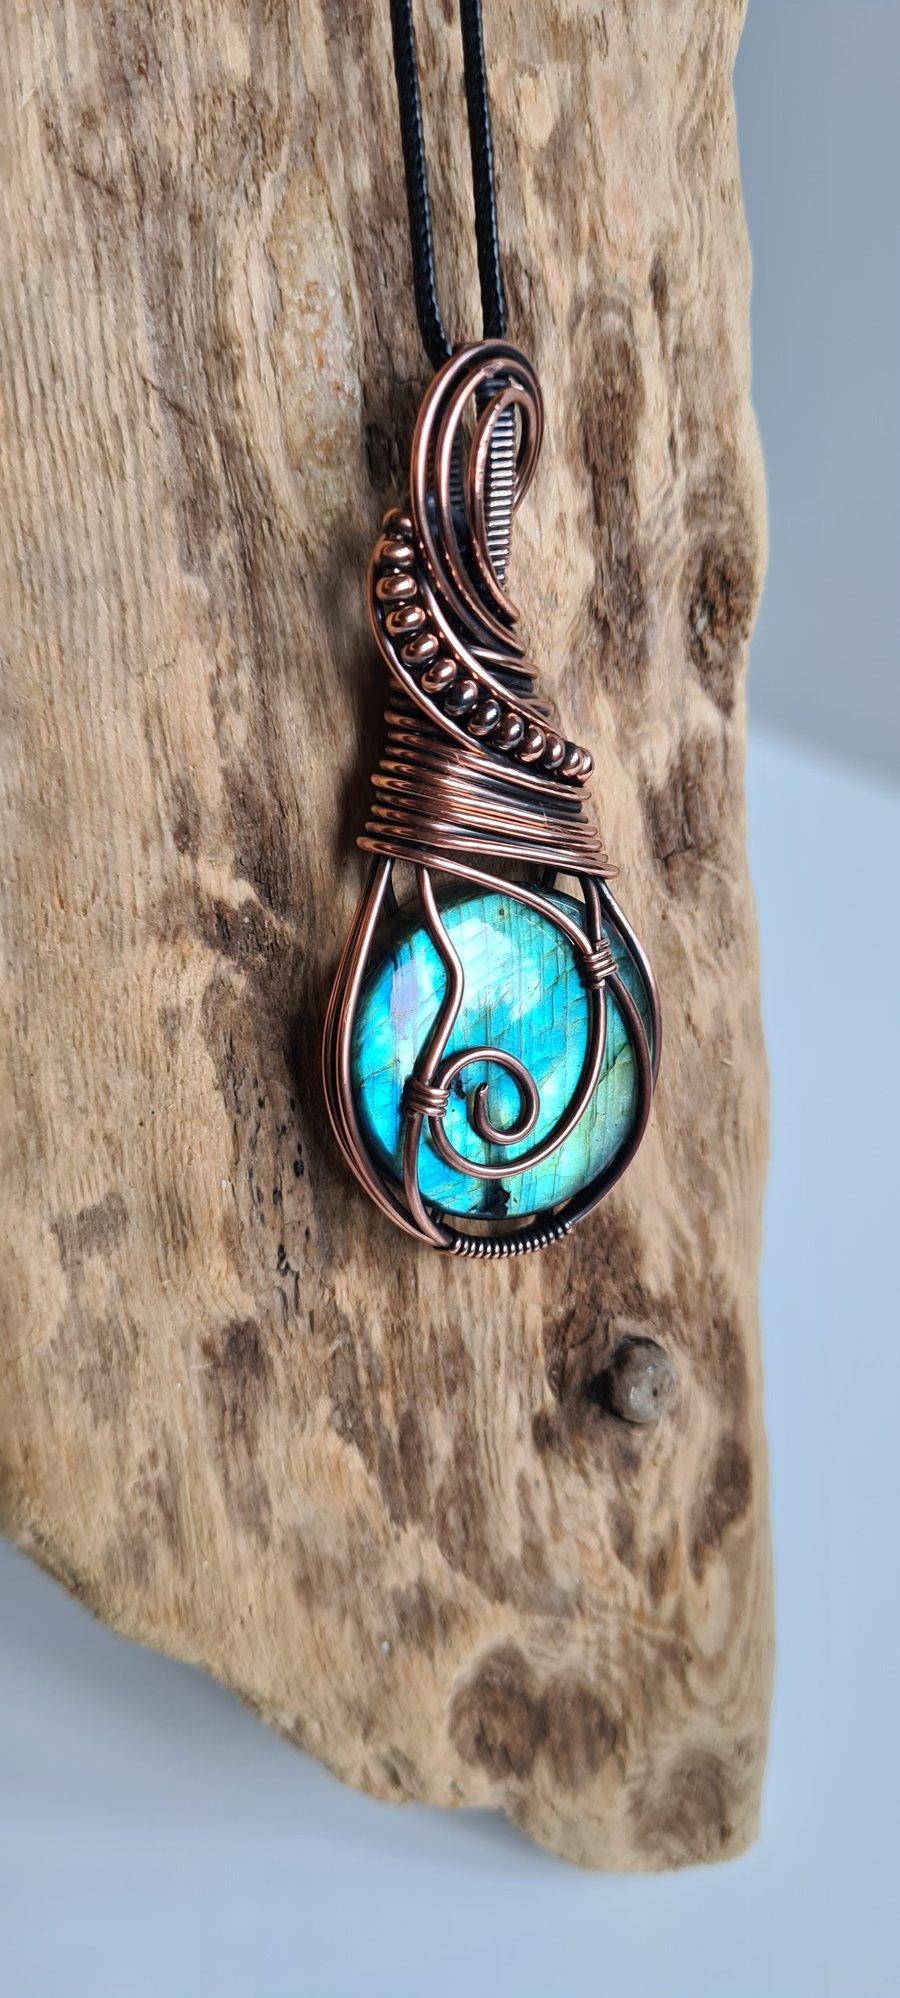 Handmade Large Natural Blue Labradorite & Copper Statement Necklace Pendant Gift